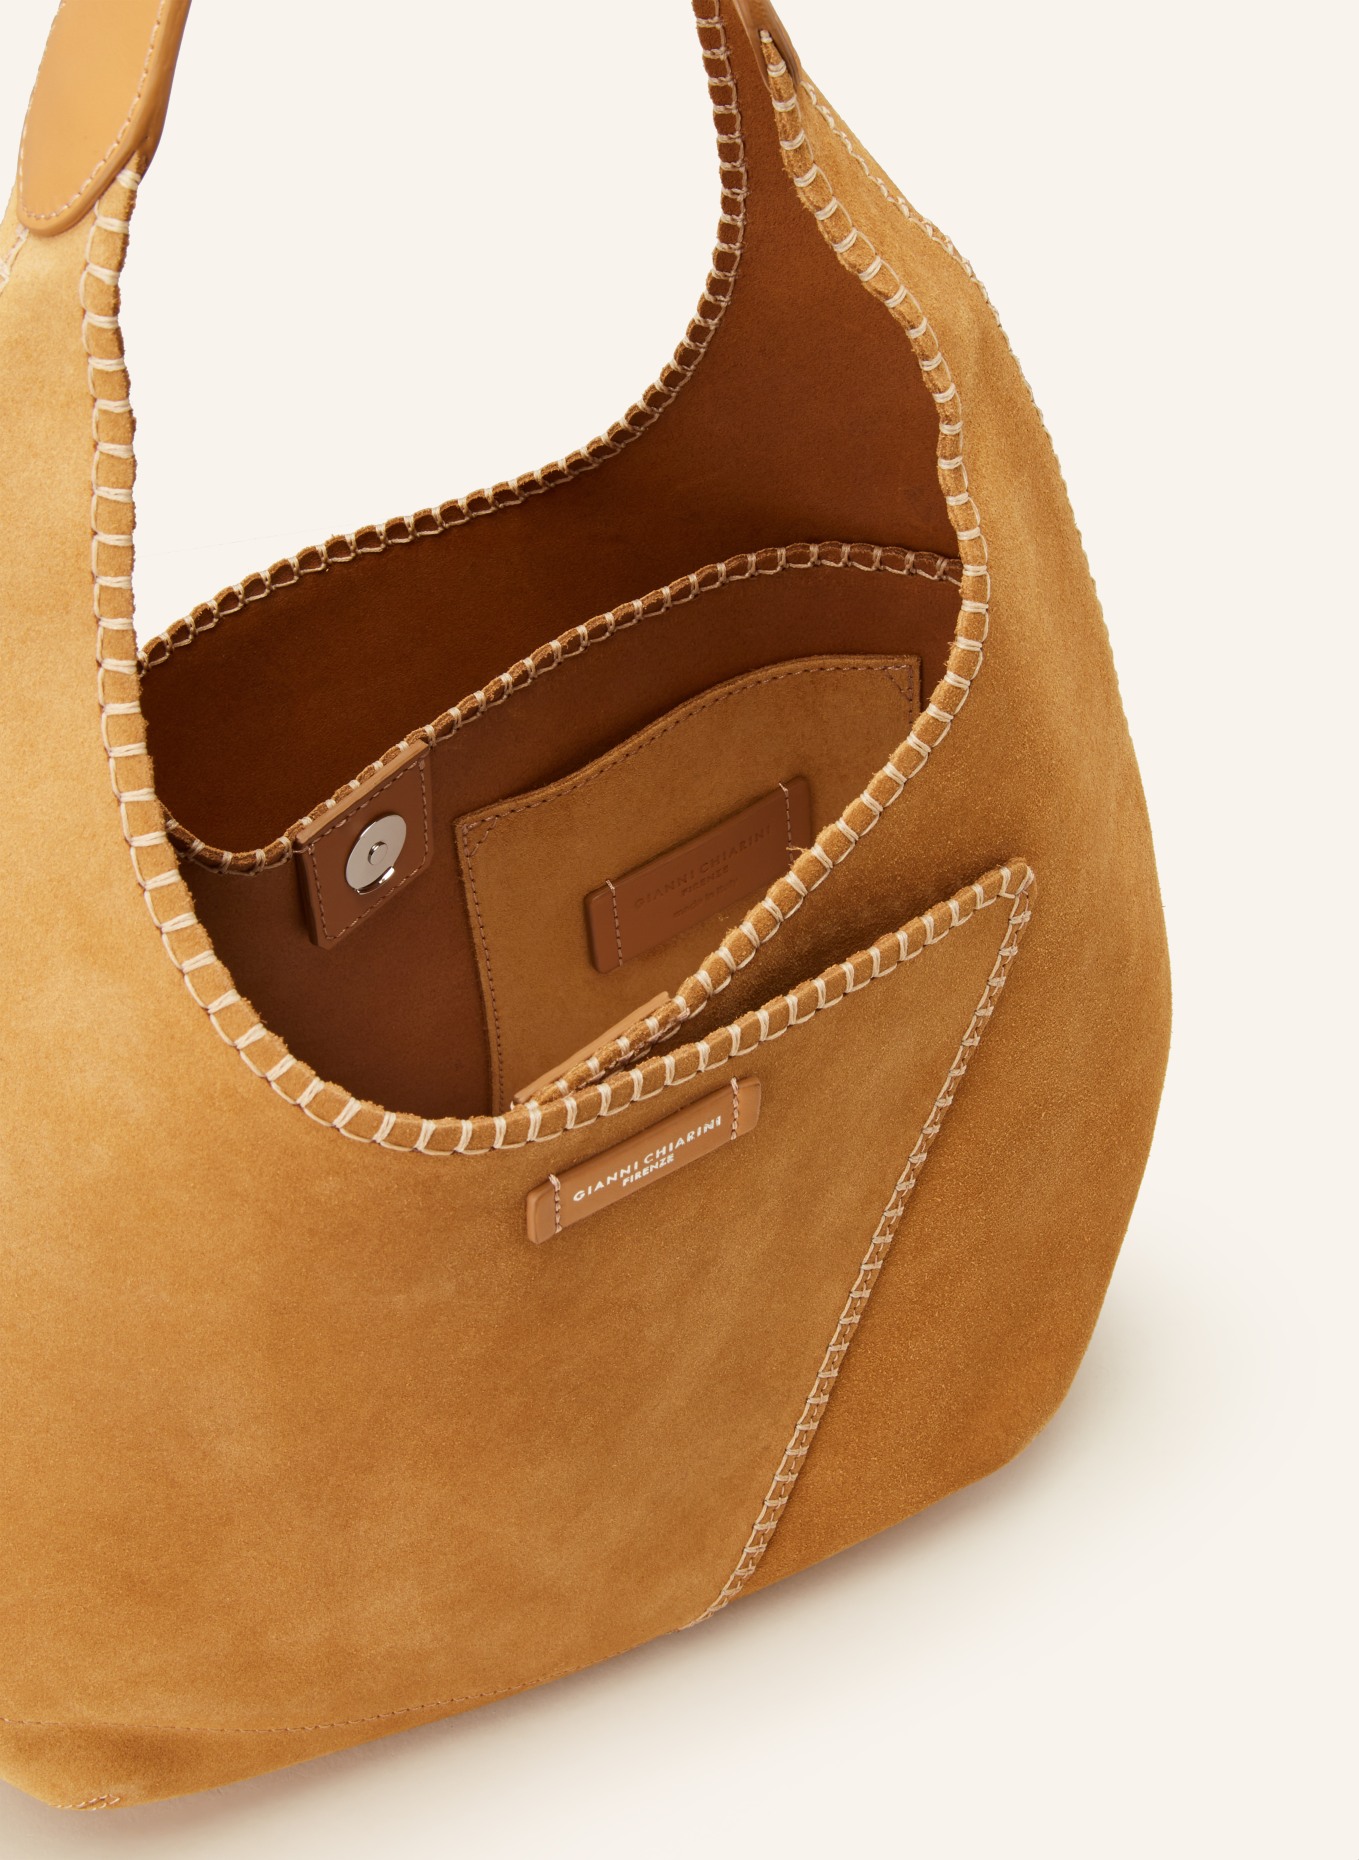 GIANNI CHIARINI Hobo-Bag mit Pouch, Farbe: CAMEL (Bild 3)